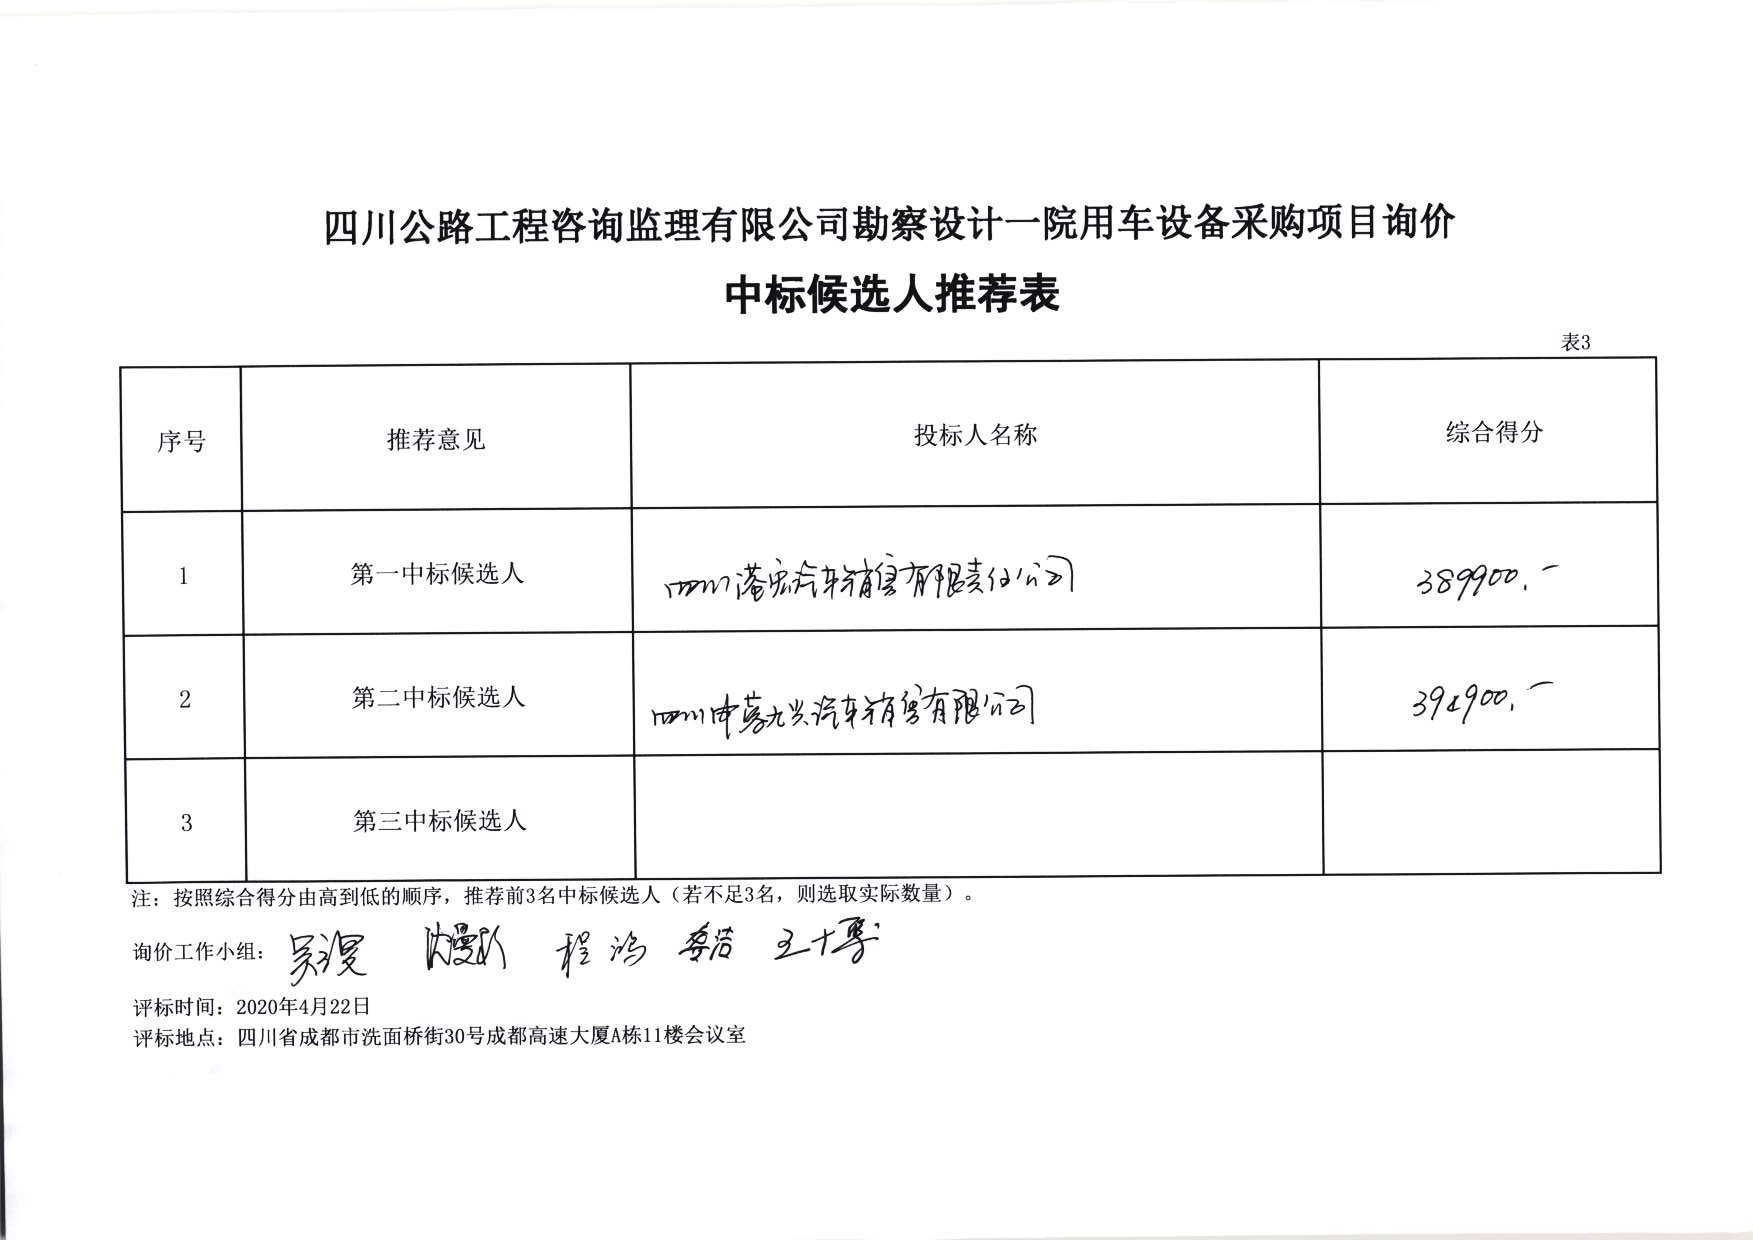 ld乐动·体育（中国）官方网站勘察设计一院用车设备采购项目询价中标候选人推荐表.jpg